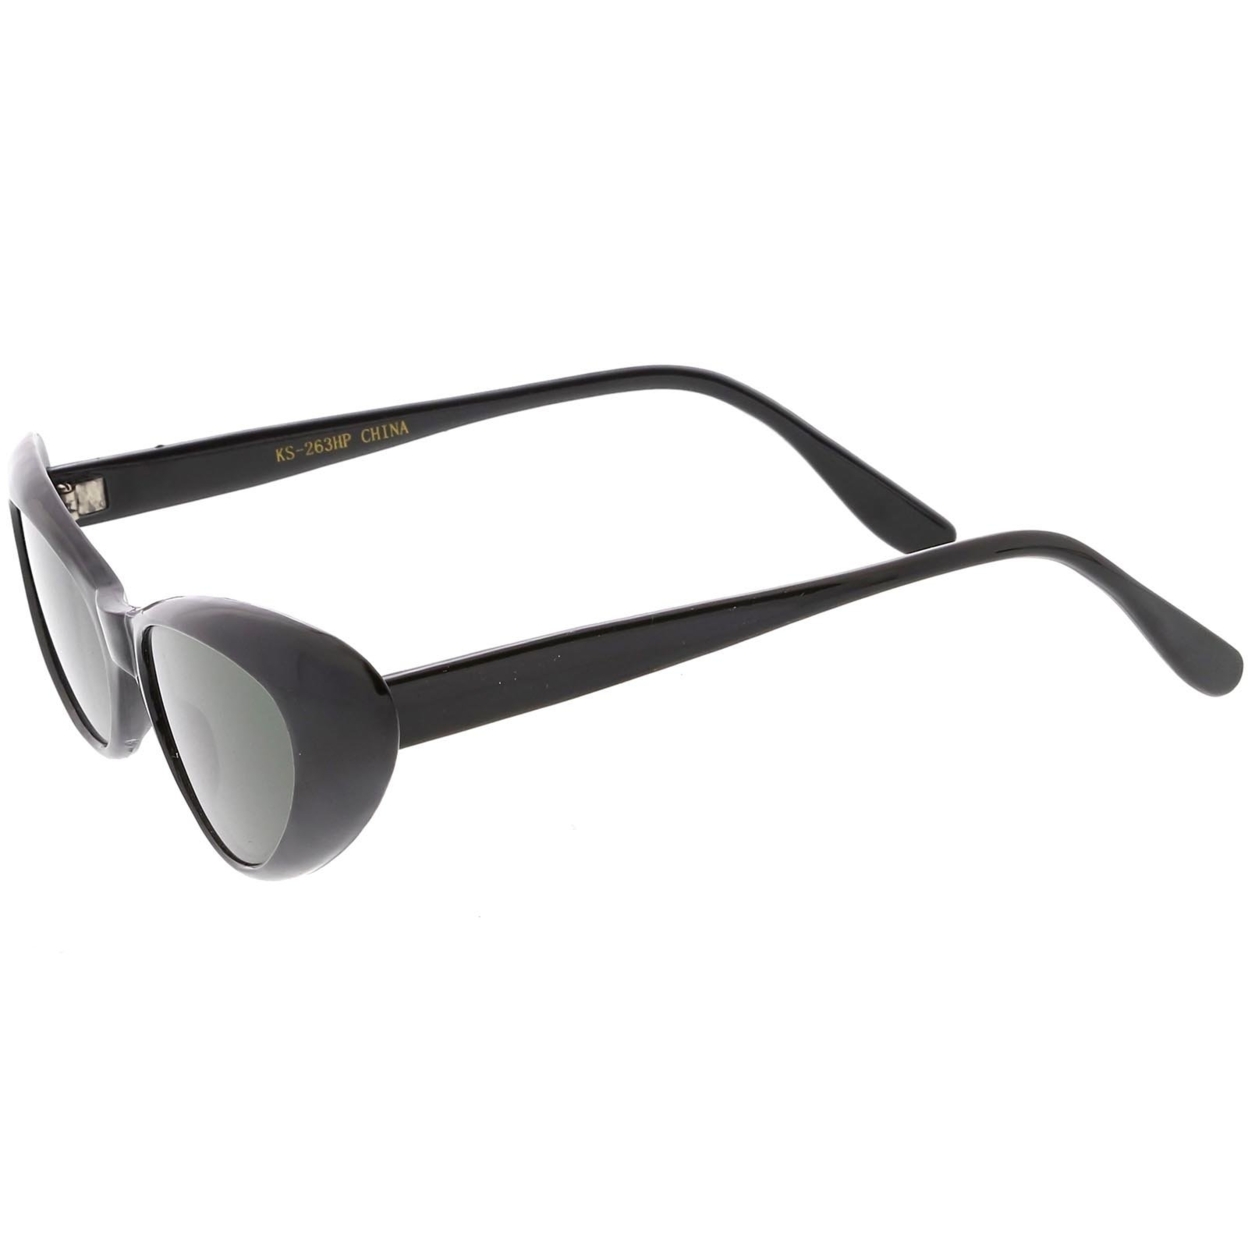 True Vintage Cat Eye Sunglasses Neutral Colored Lens 48mm - Black / Smoke